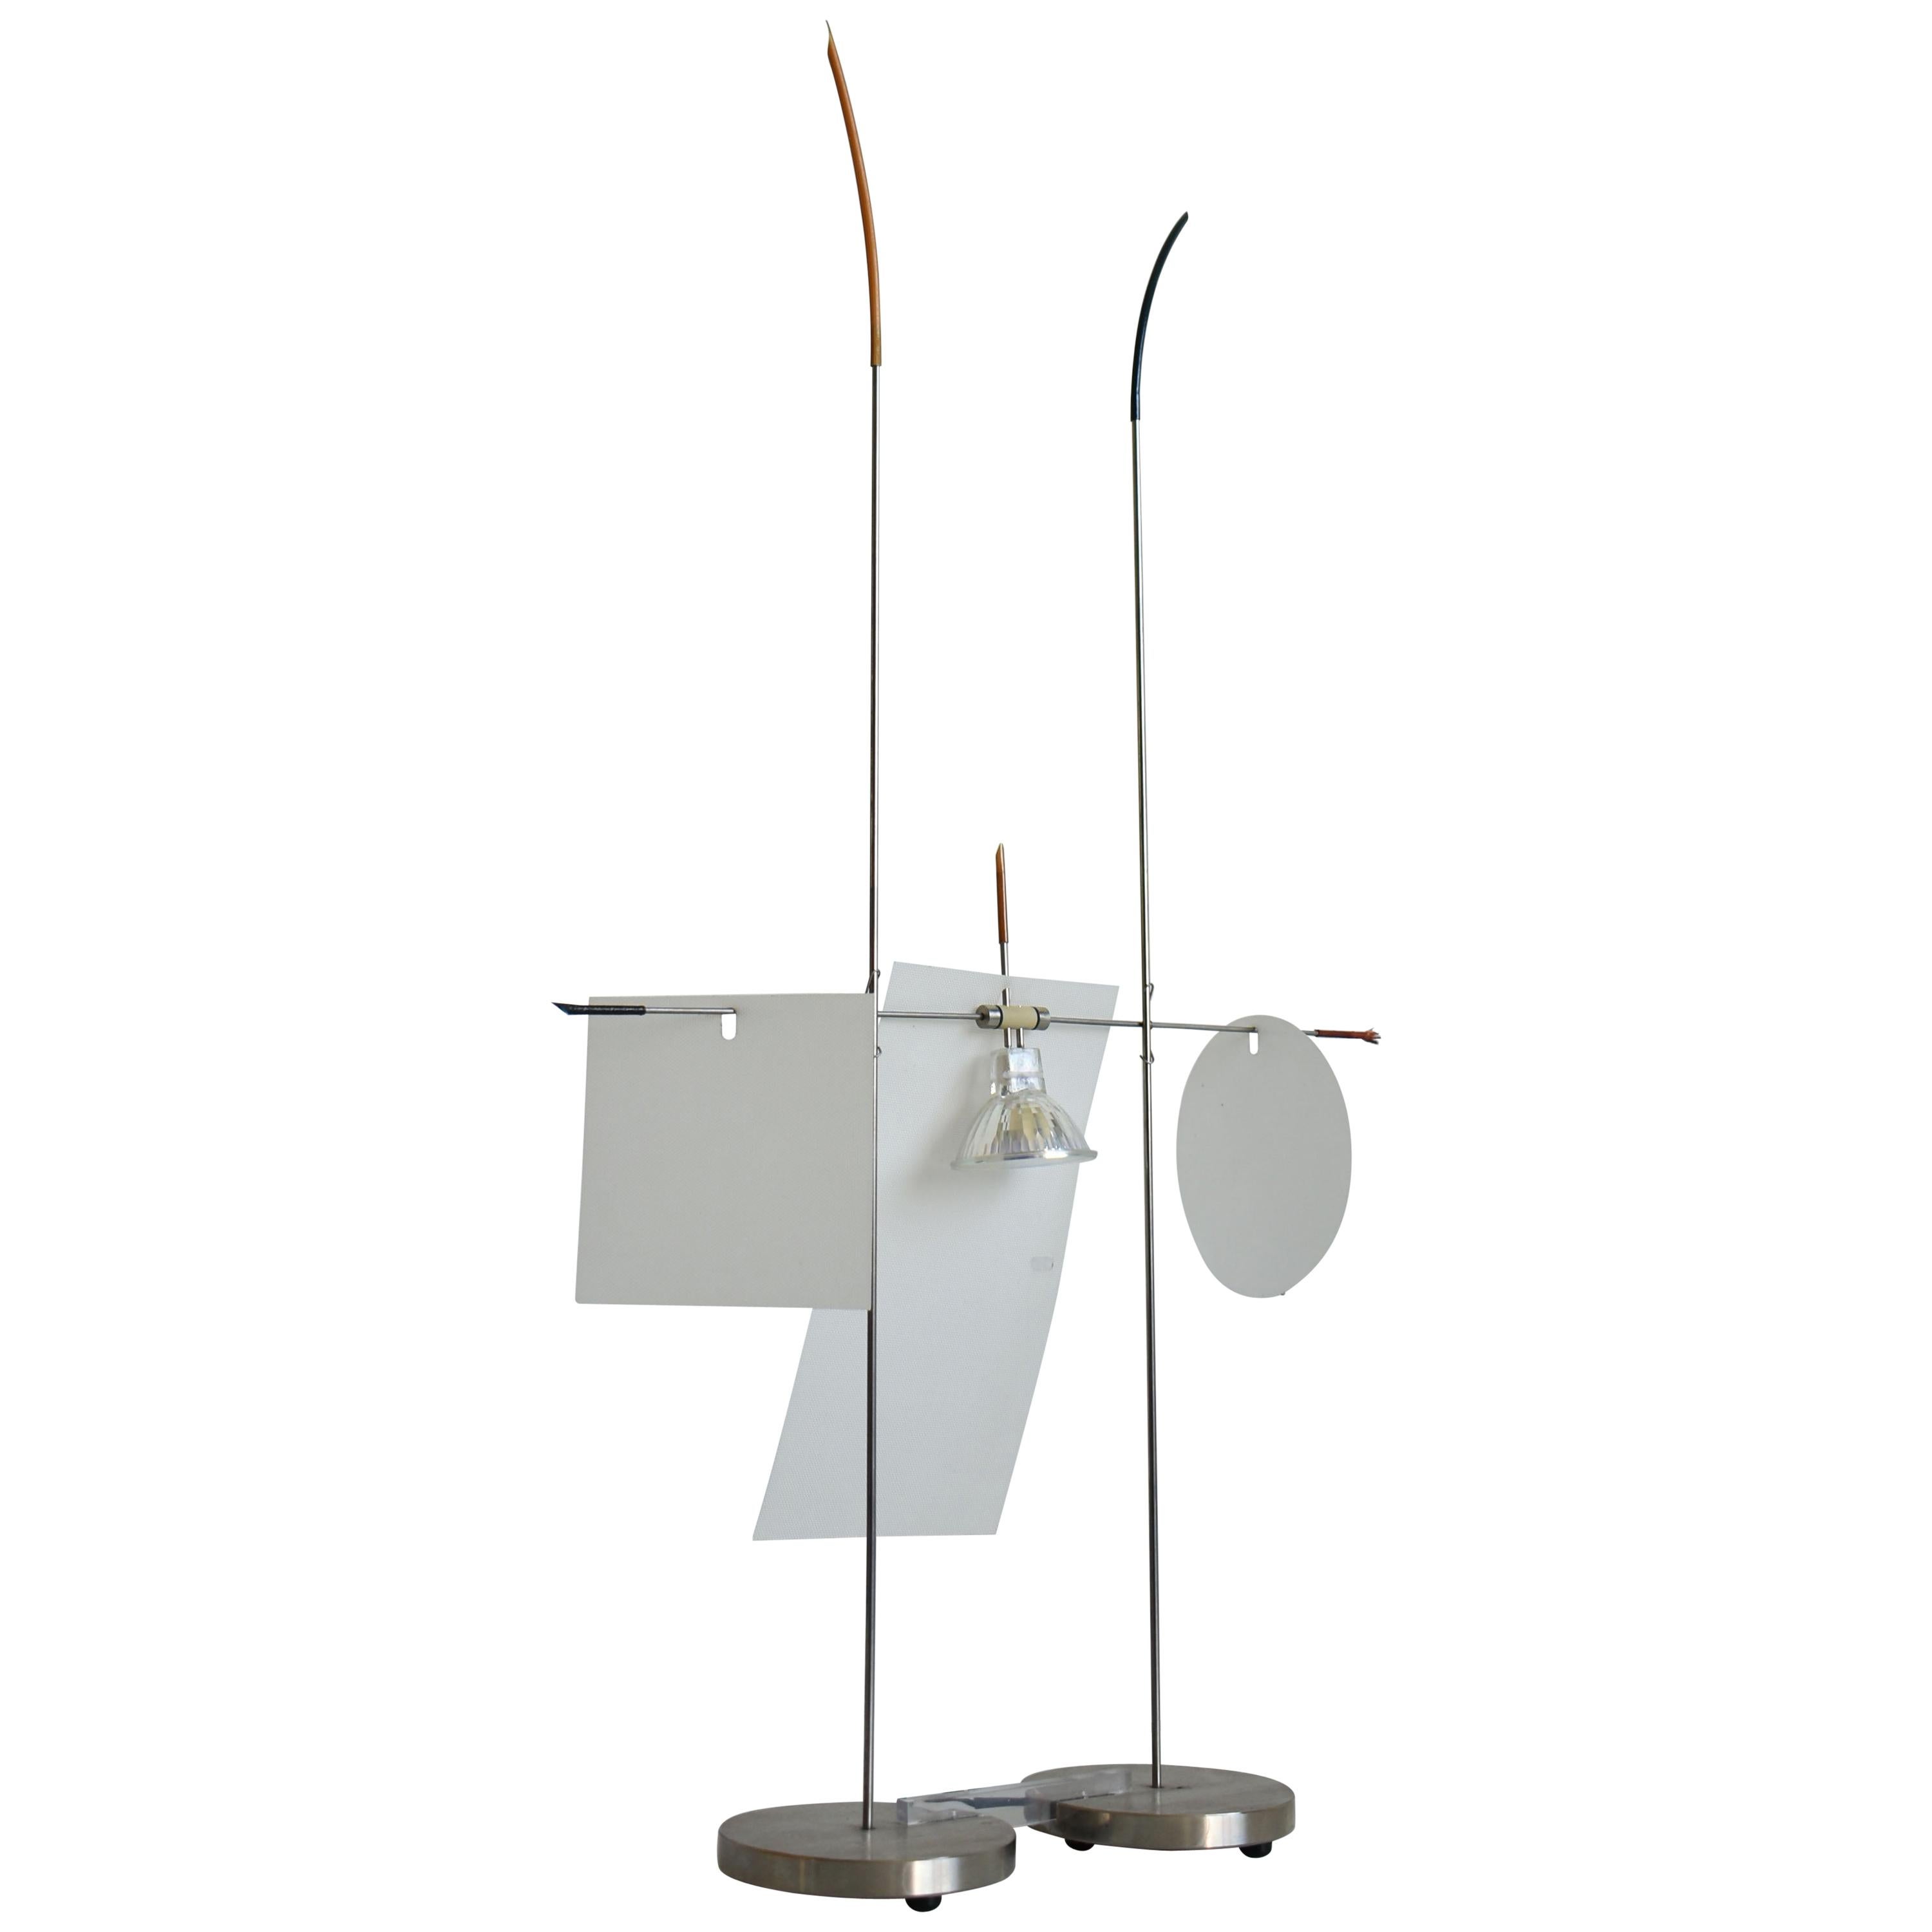 'Fukushu' Table Lamp, Ingo Maurer for Design M, Germany, 1986